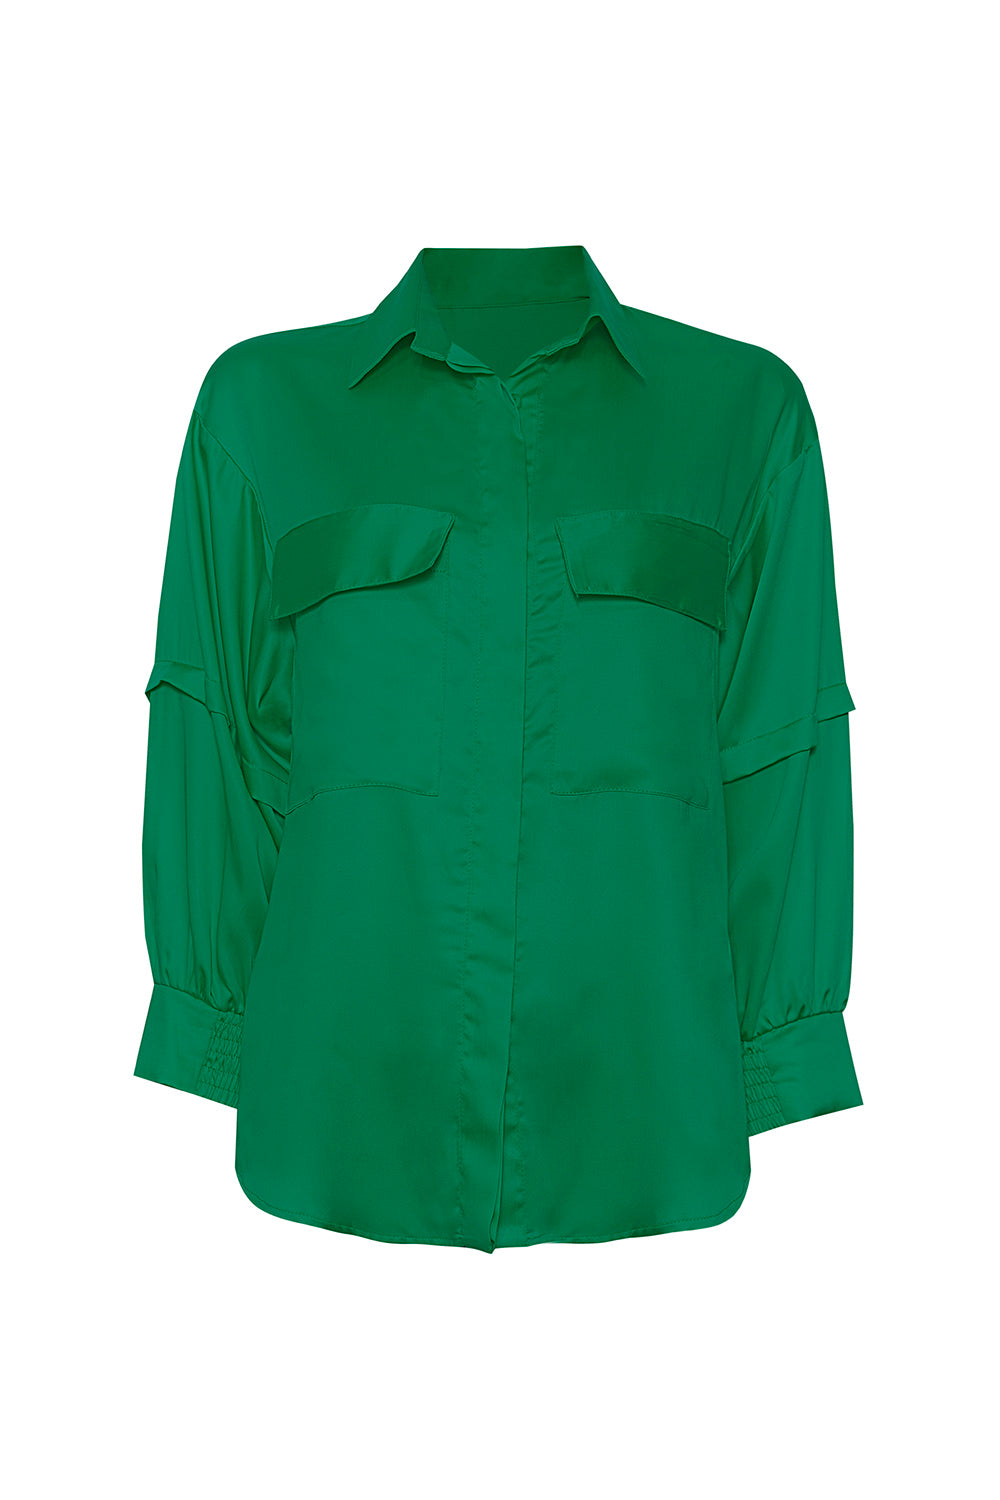 San Fermina Green Shirt